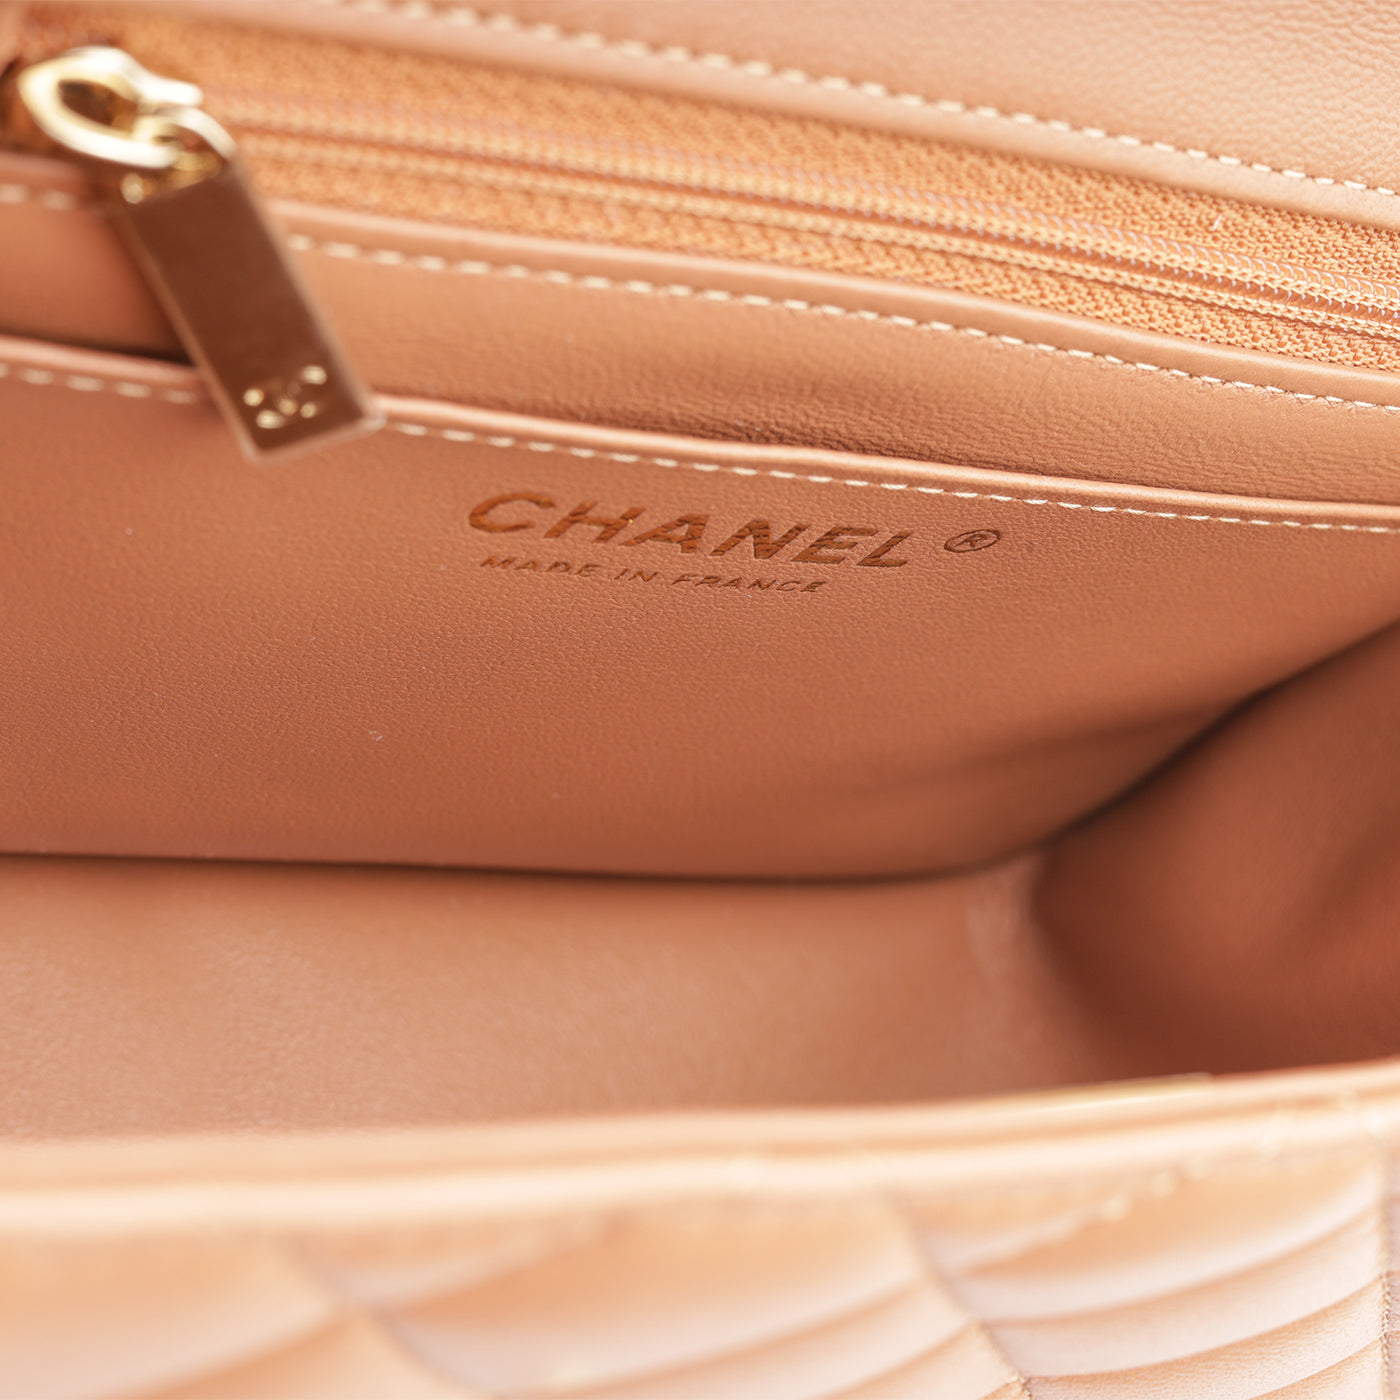 Chanel Mini Square Caramel - Designer WishBags